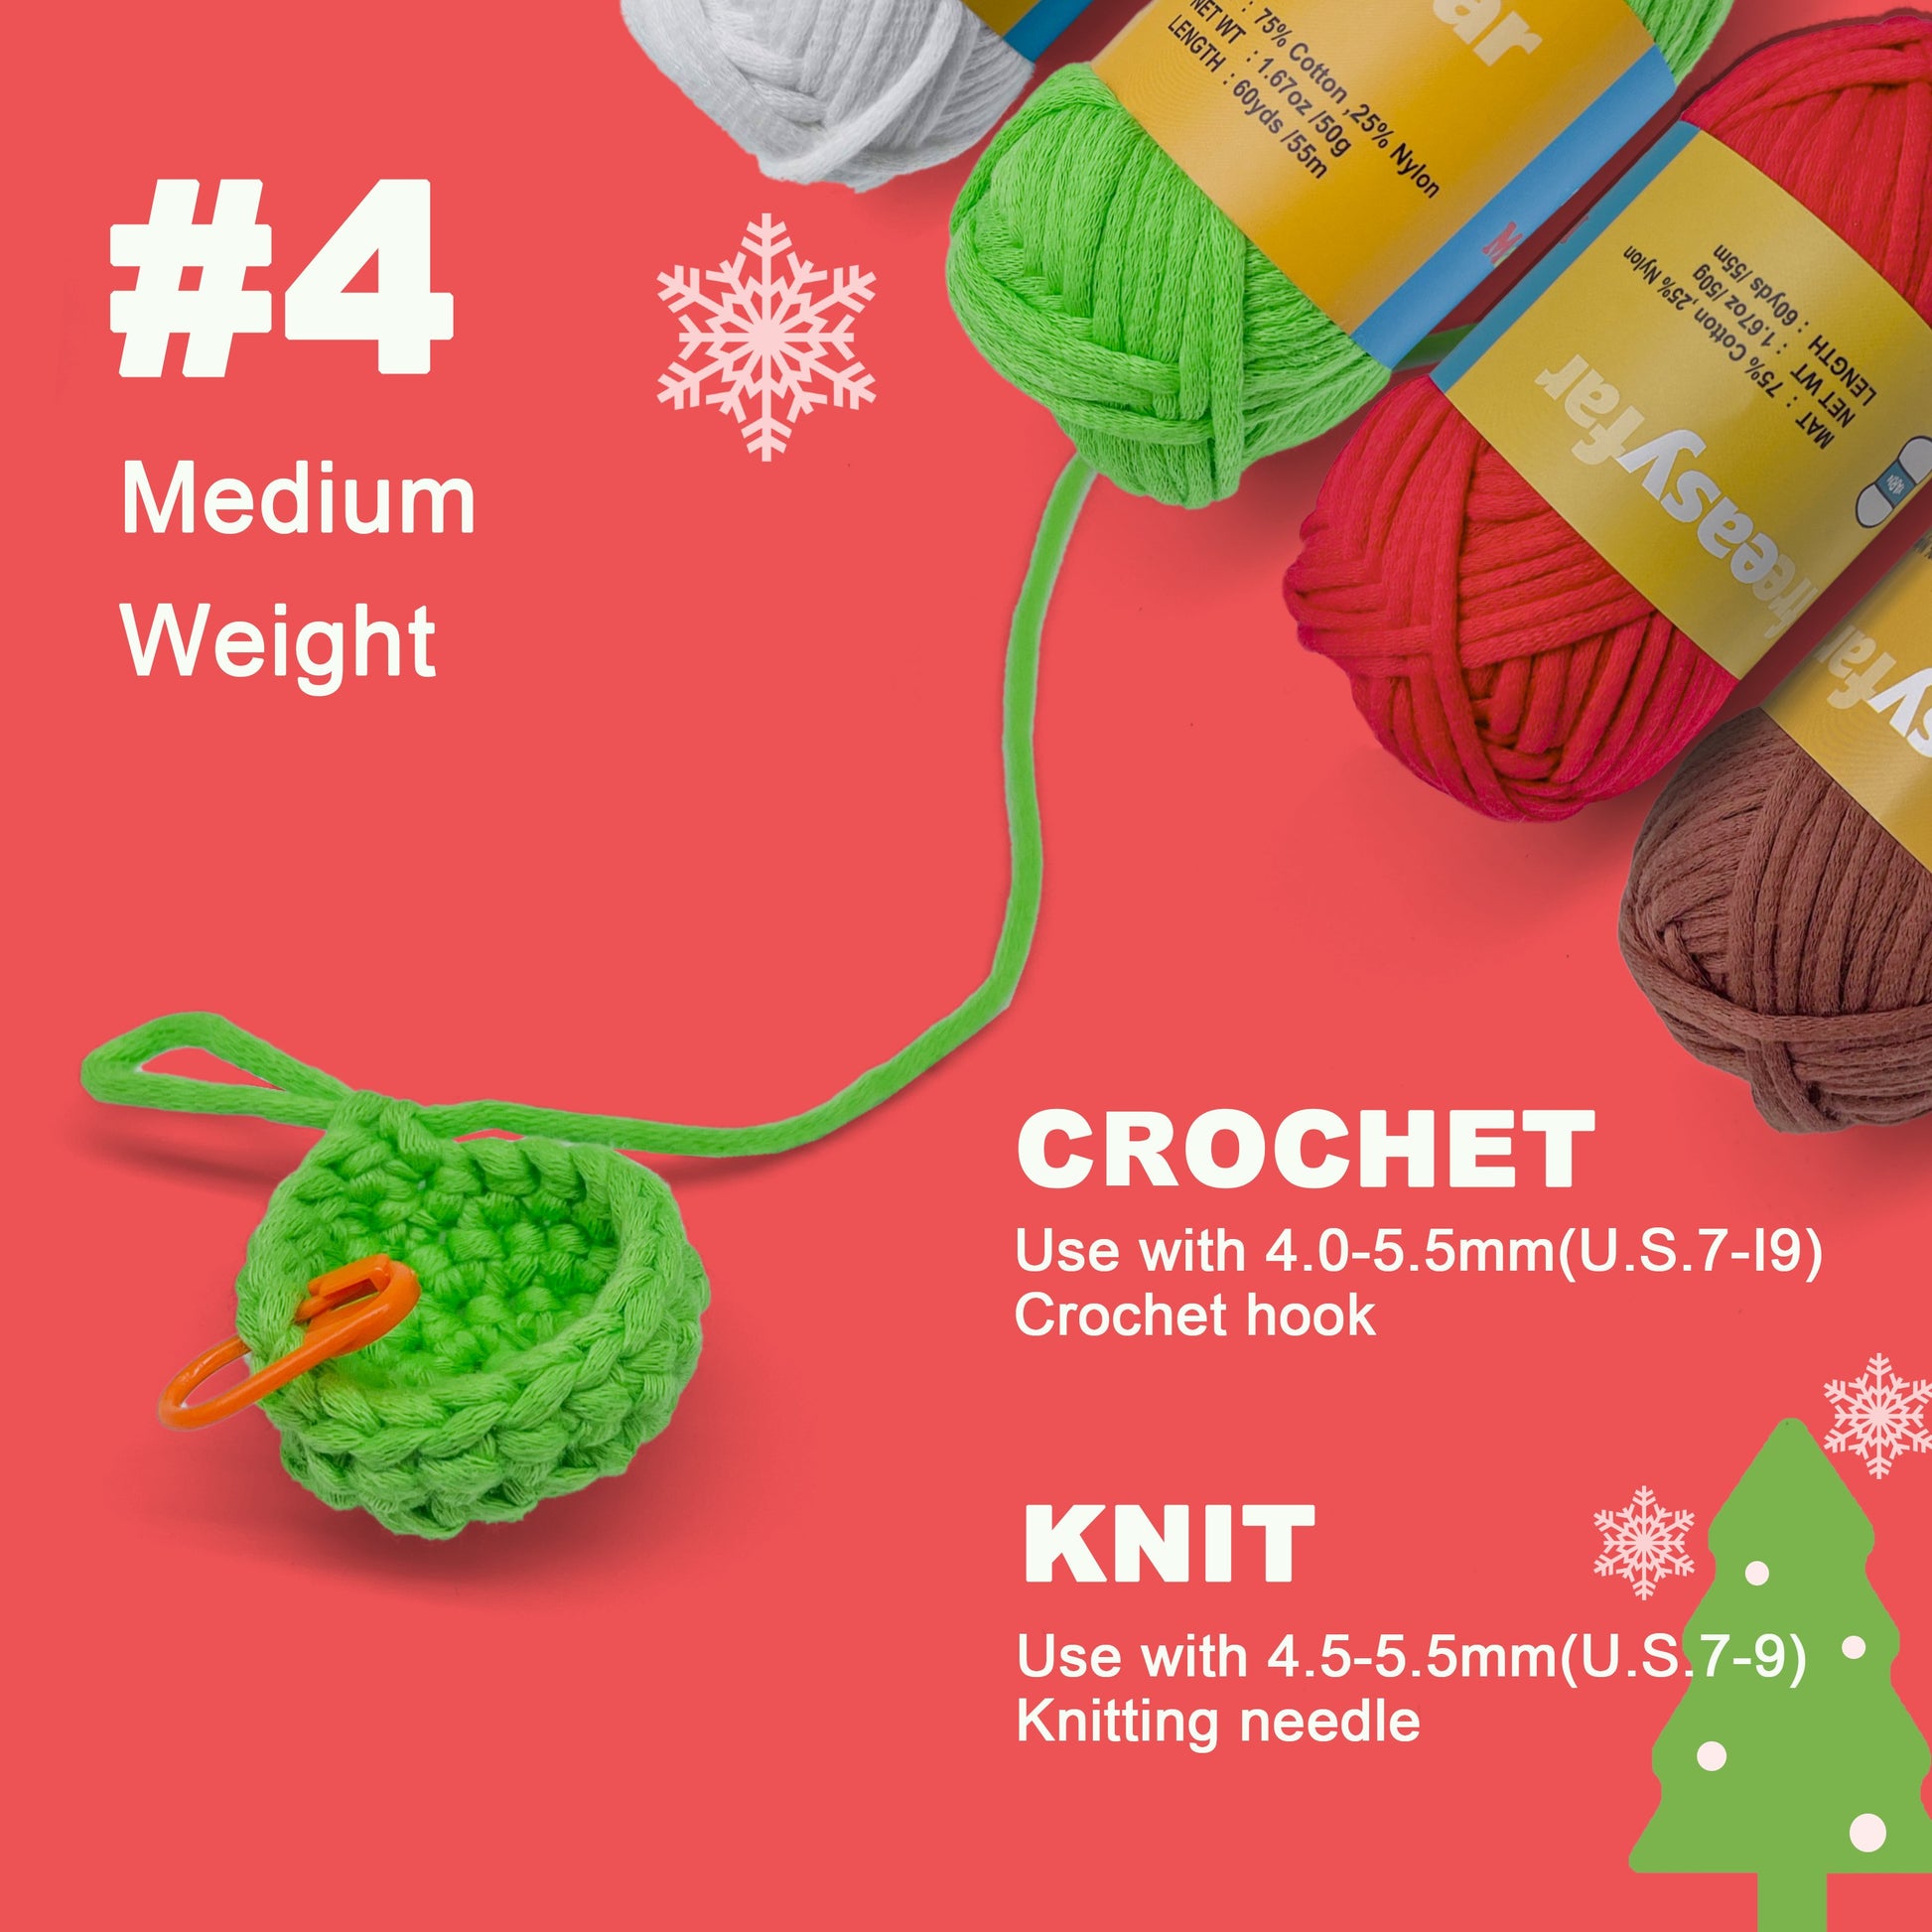 The Woobles Crochet Hooks 4.0 mm Set of 3